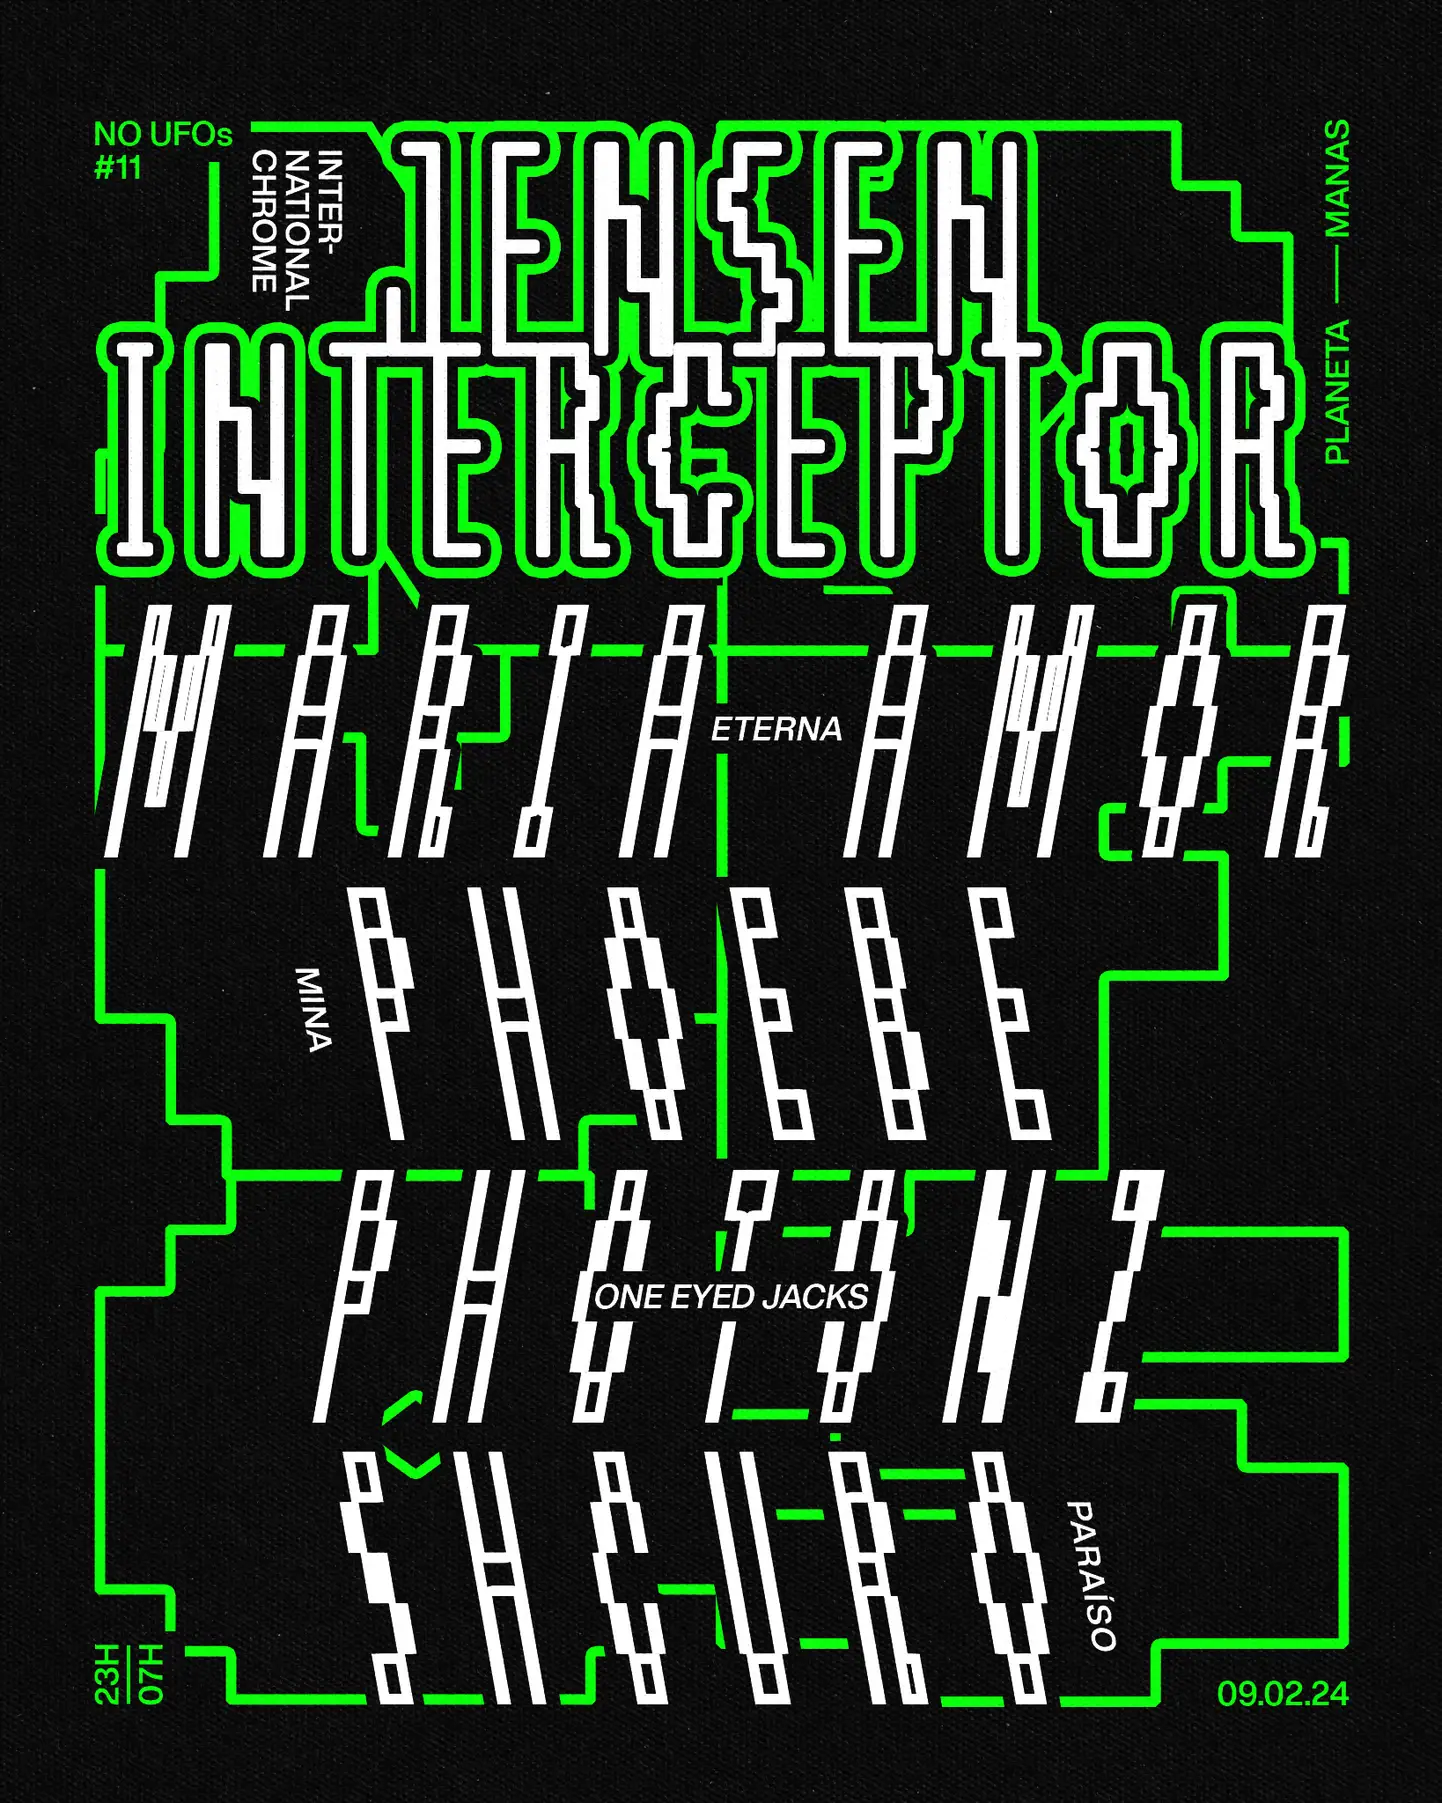 No UFOs #11 with Jensen Interceptor, Maria Amor, Phoebe, Shcuro and Photonz